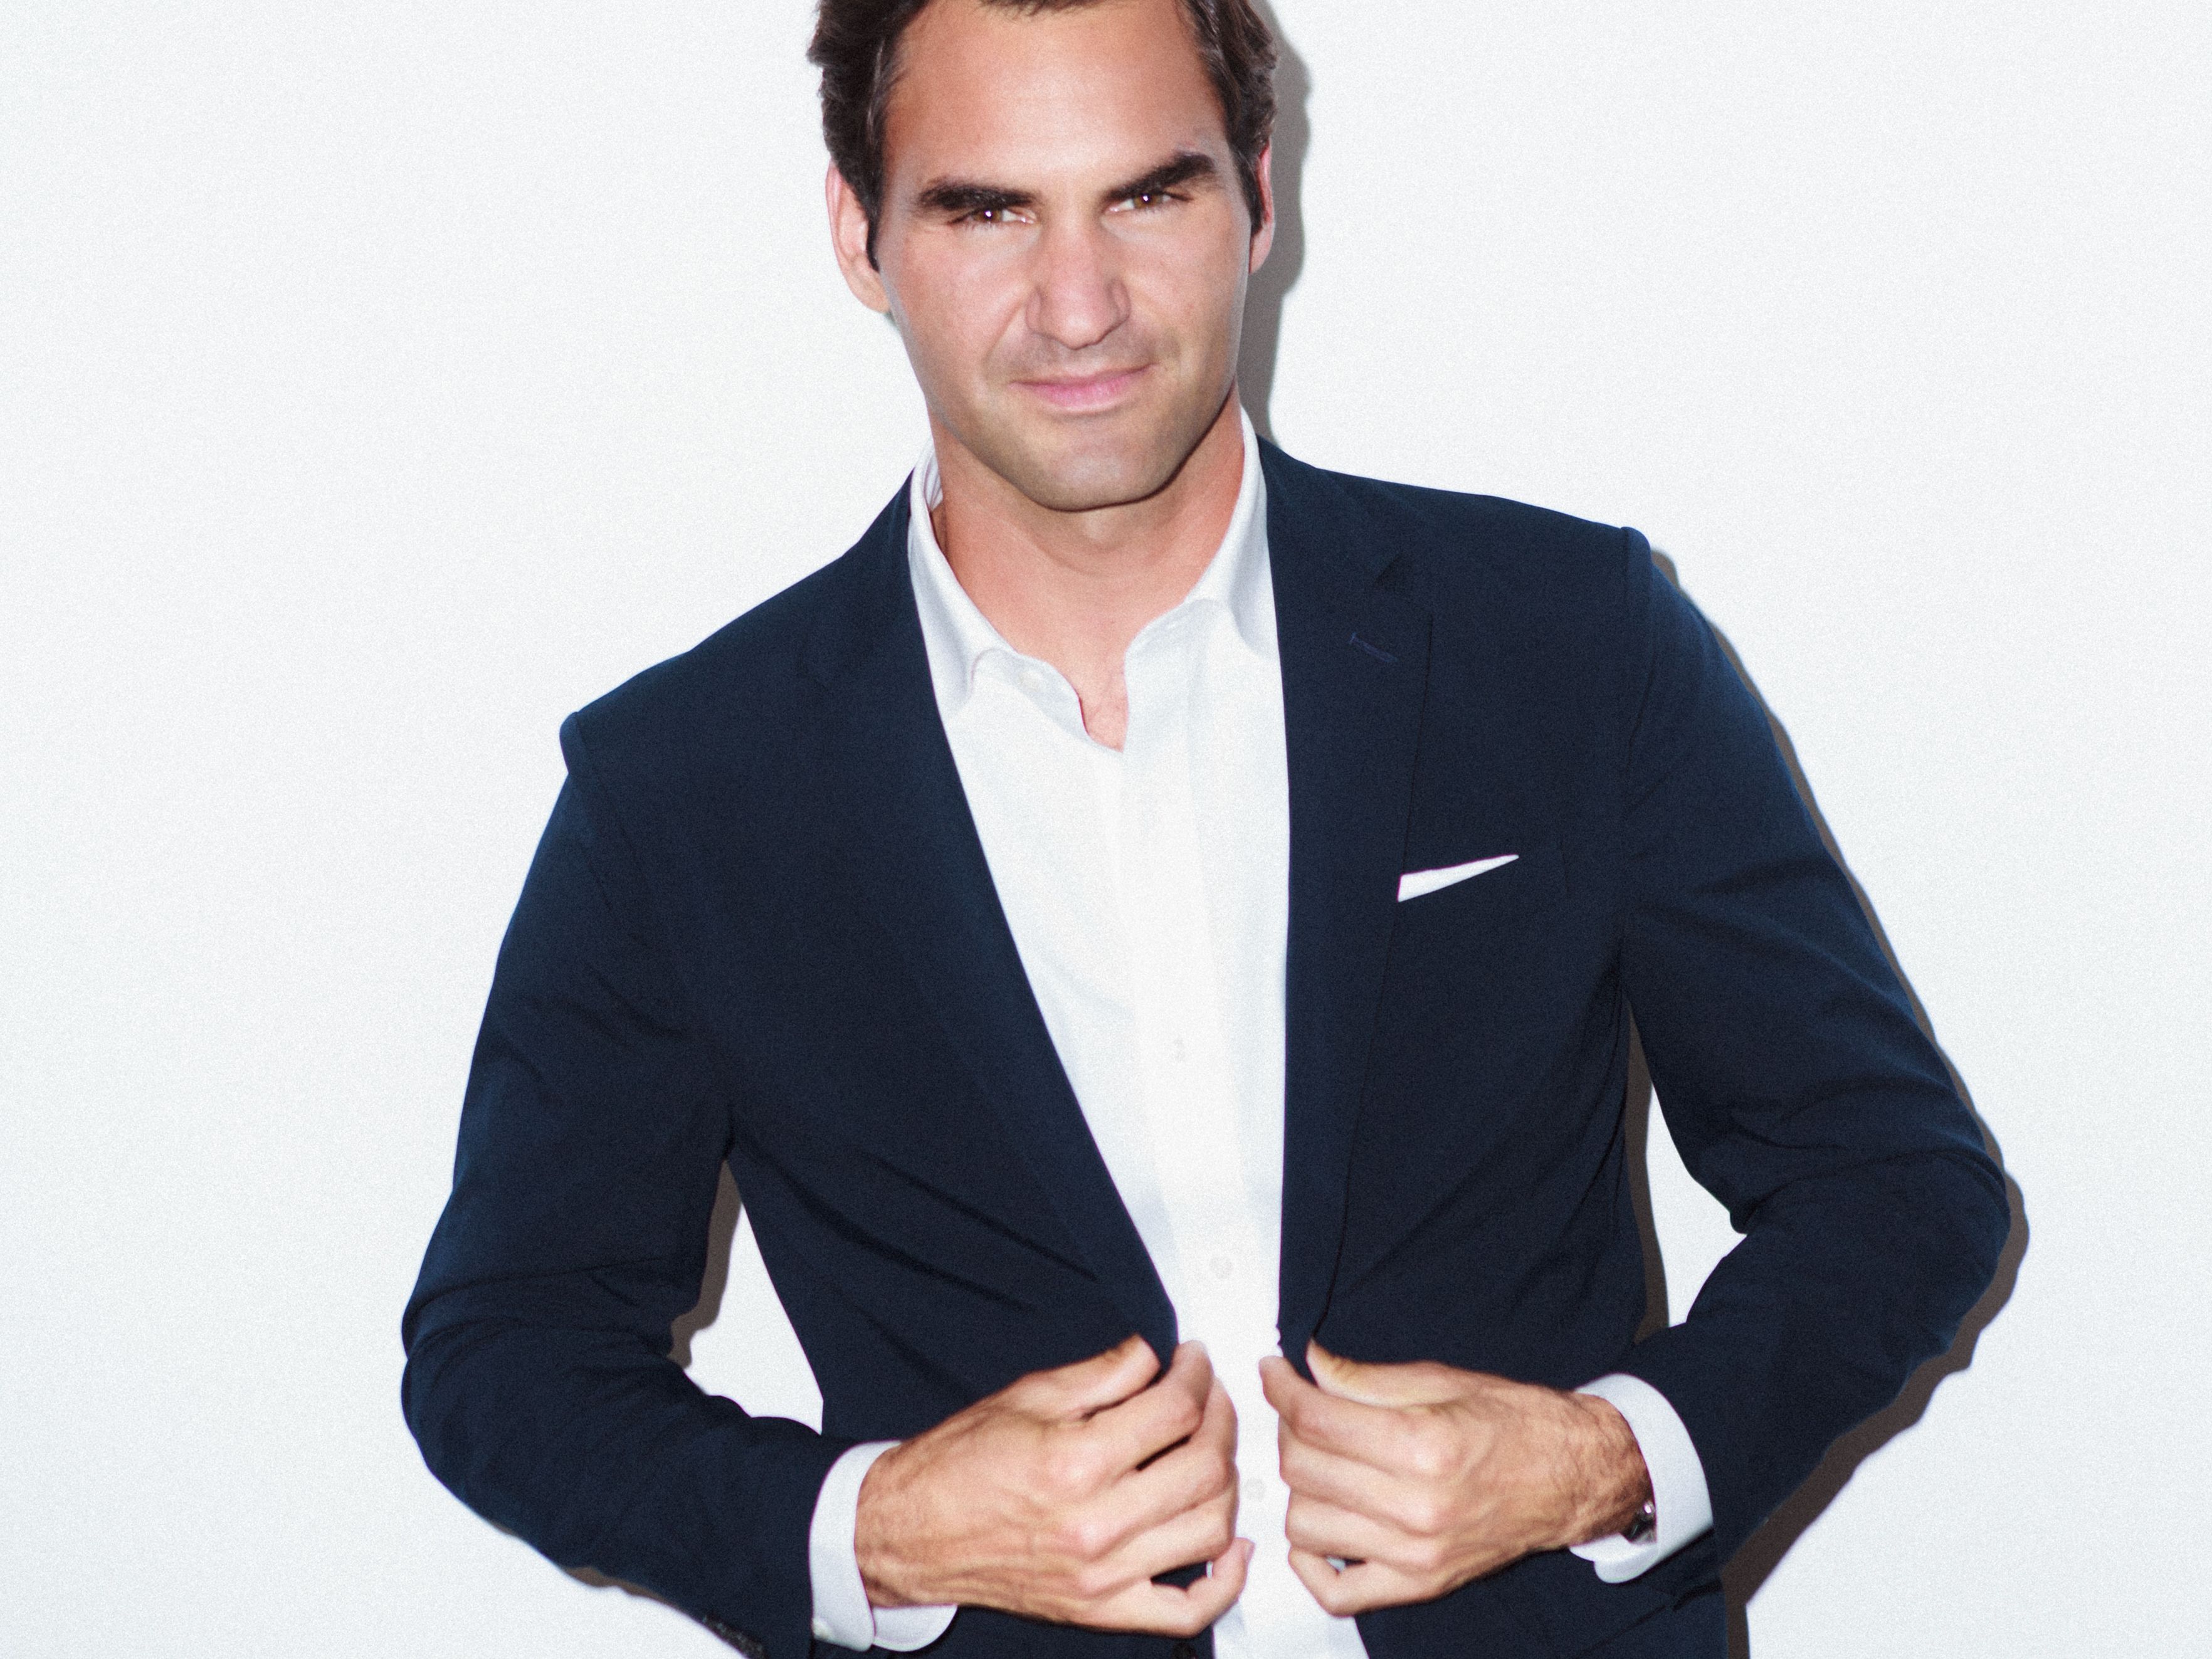 Buy Roger Federers Uniqlo Tennis Gear  Roger Federer Talks Uniqlo for  US Open